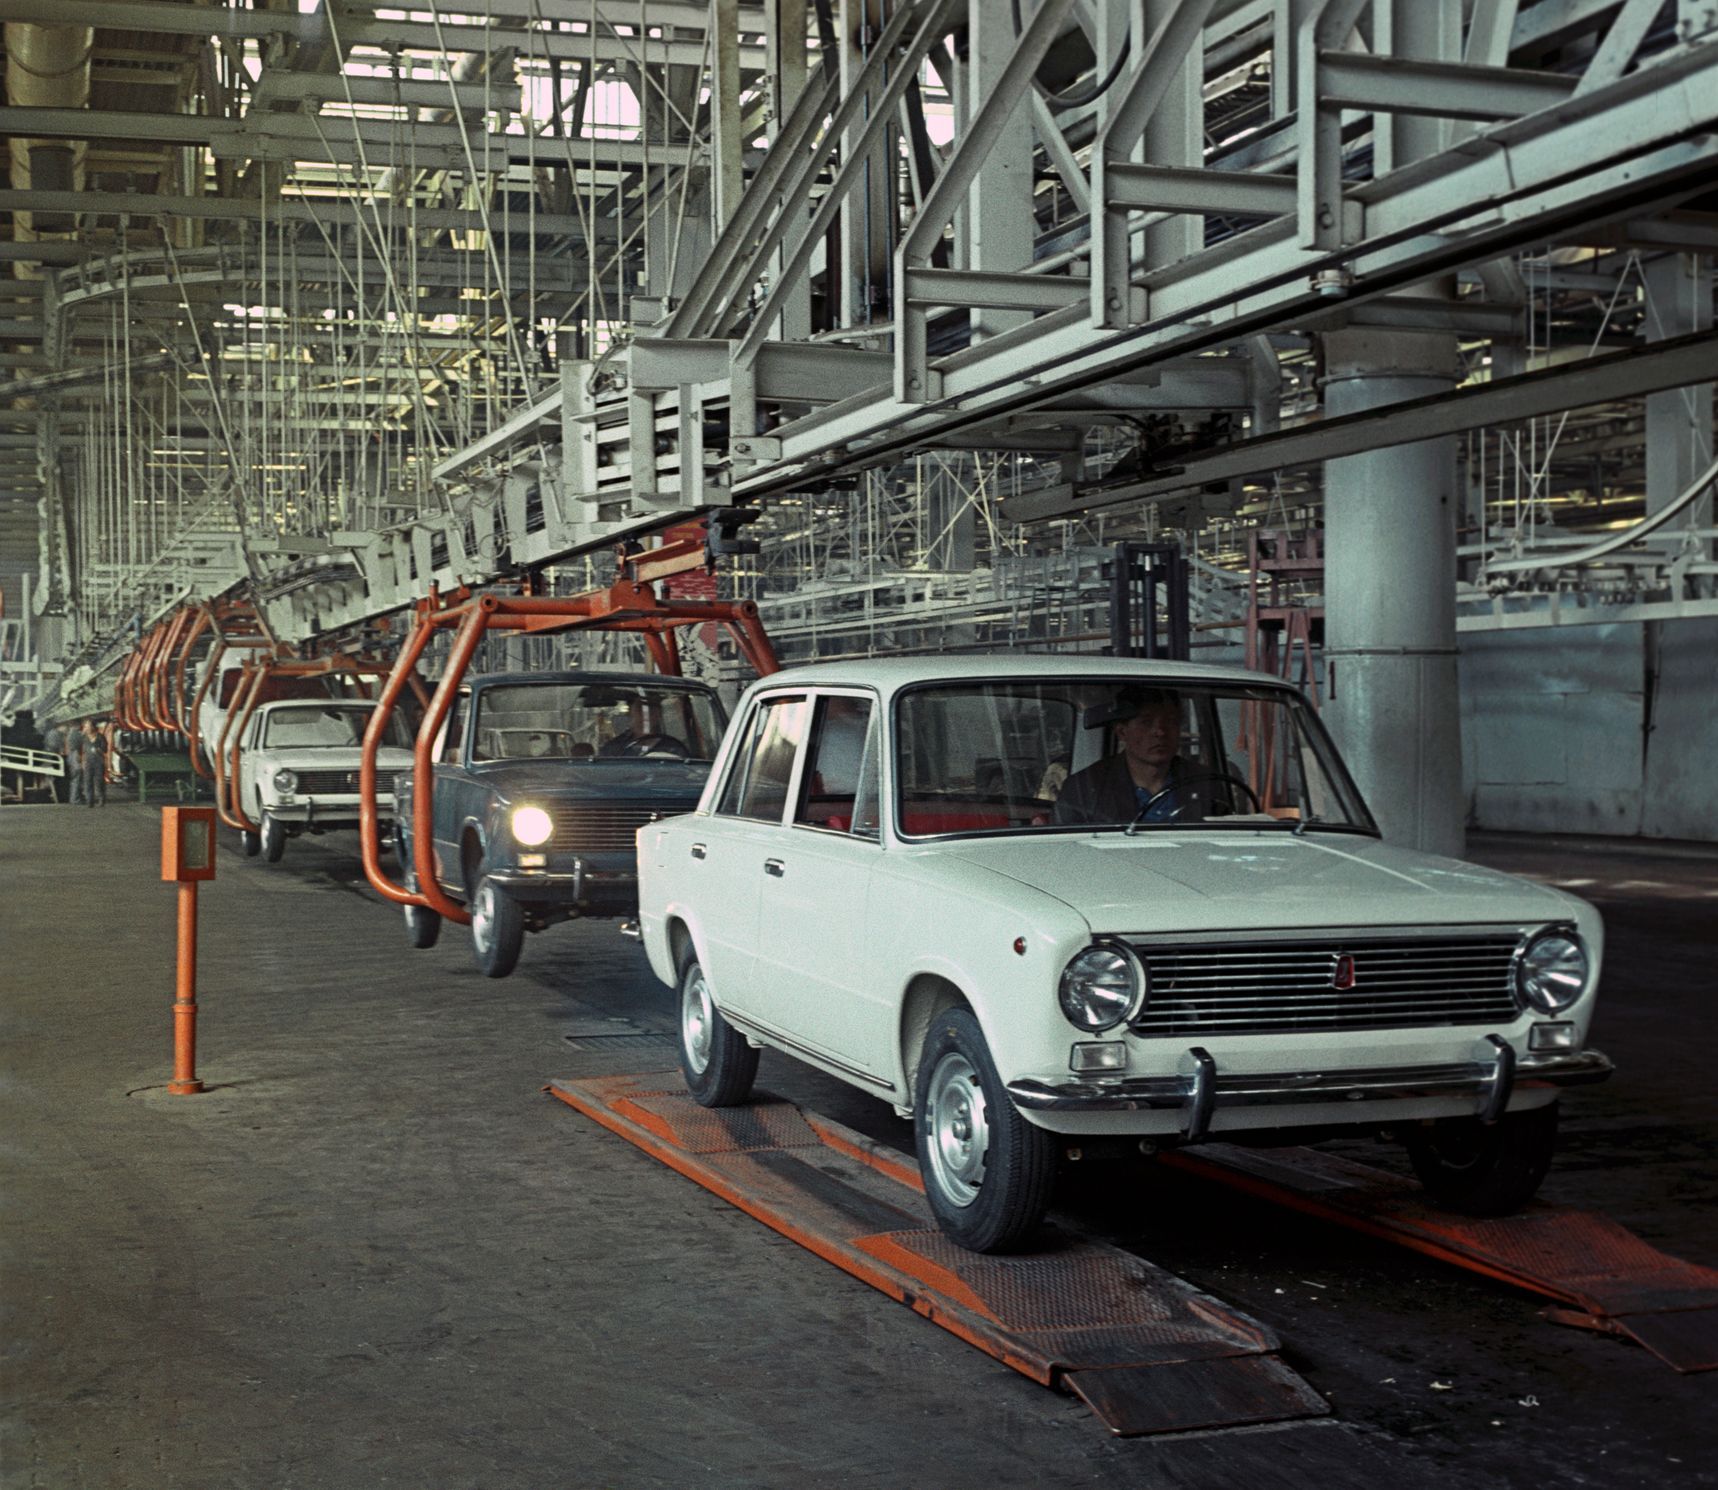 Производим тачки. ВАЗ 2101 на конвейере. ВАЗ 2101 Жигули с завода. Волжский автозавод ВАЗ-2101. Волжский автомобильный завод в Тольятти 1966.